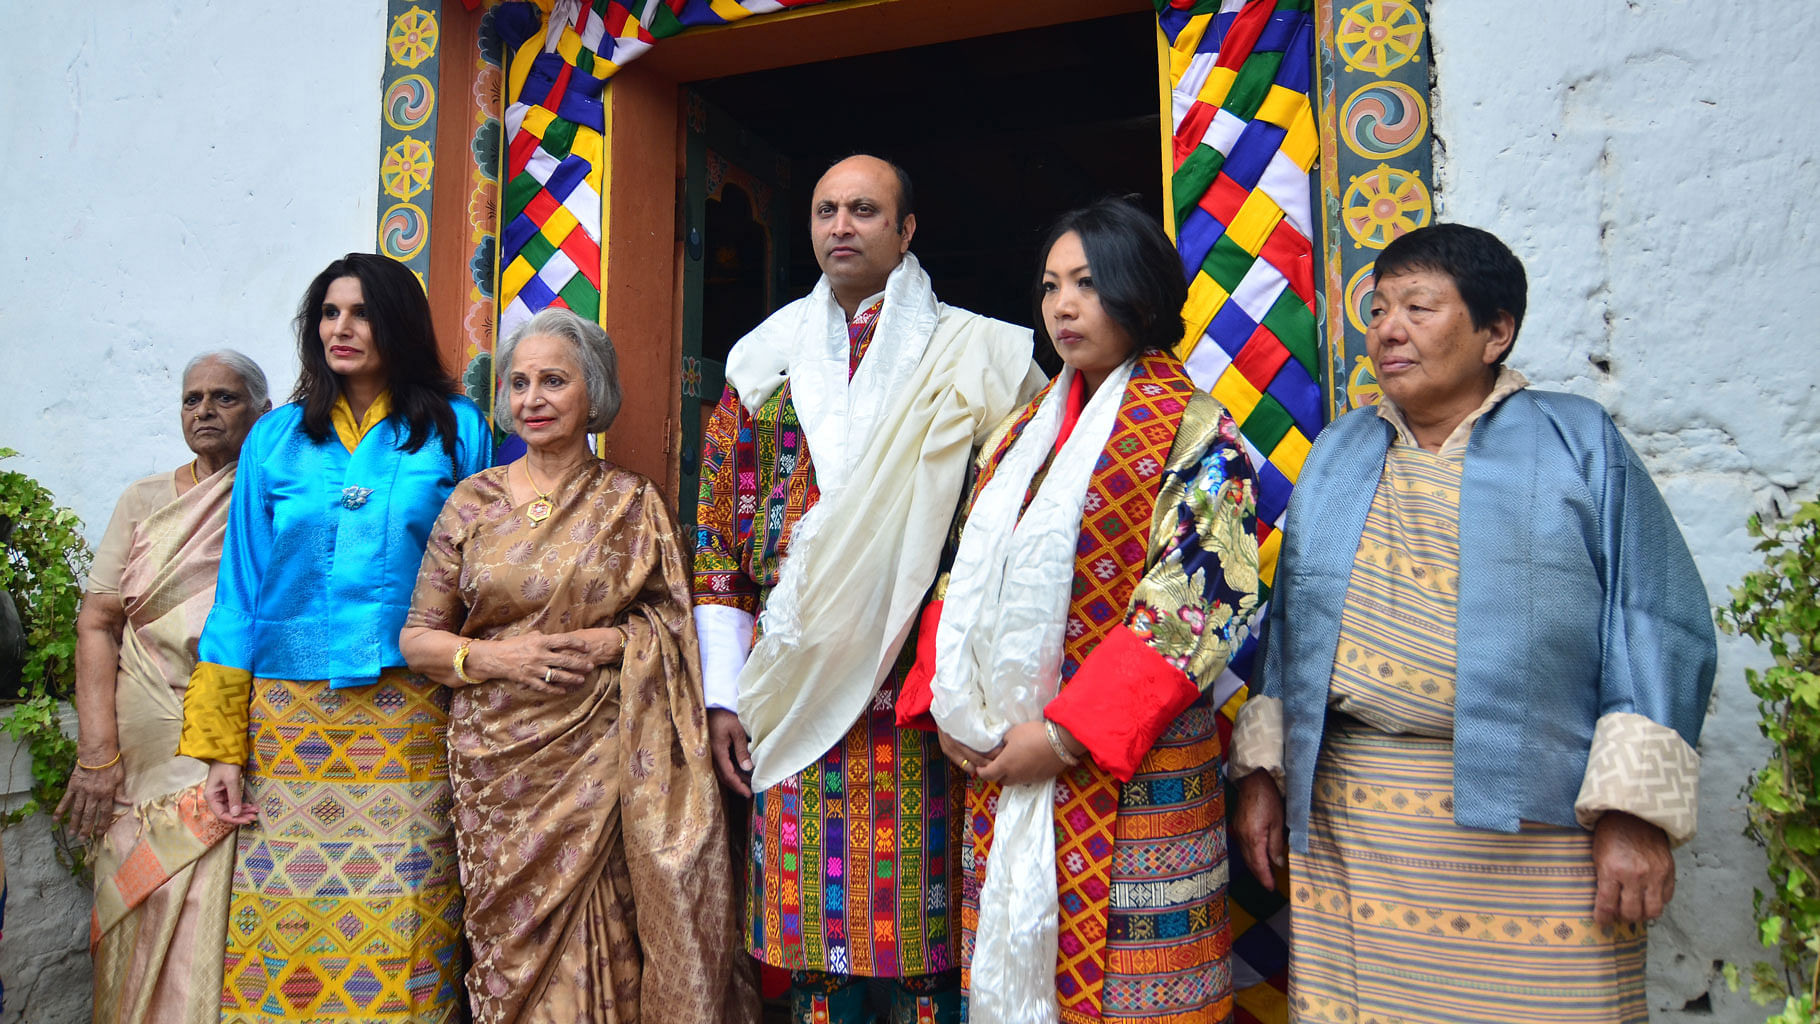 Exclusive: Waheeda Rehman's Son Has A Dream Wedding In Bhutan